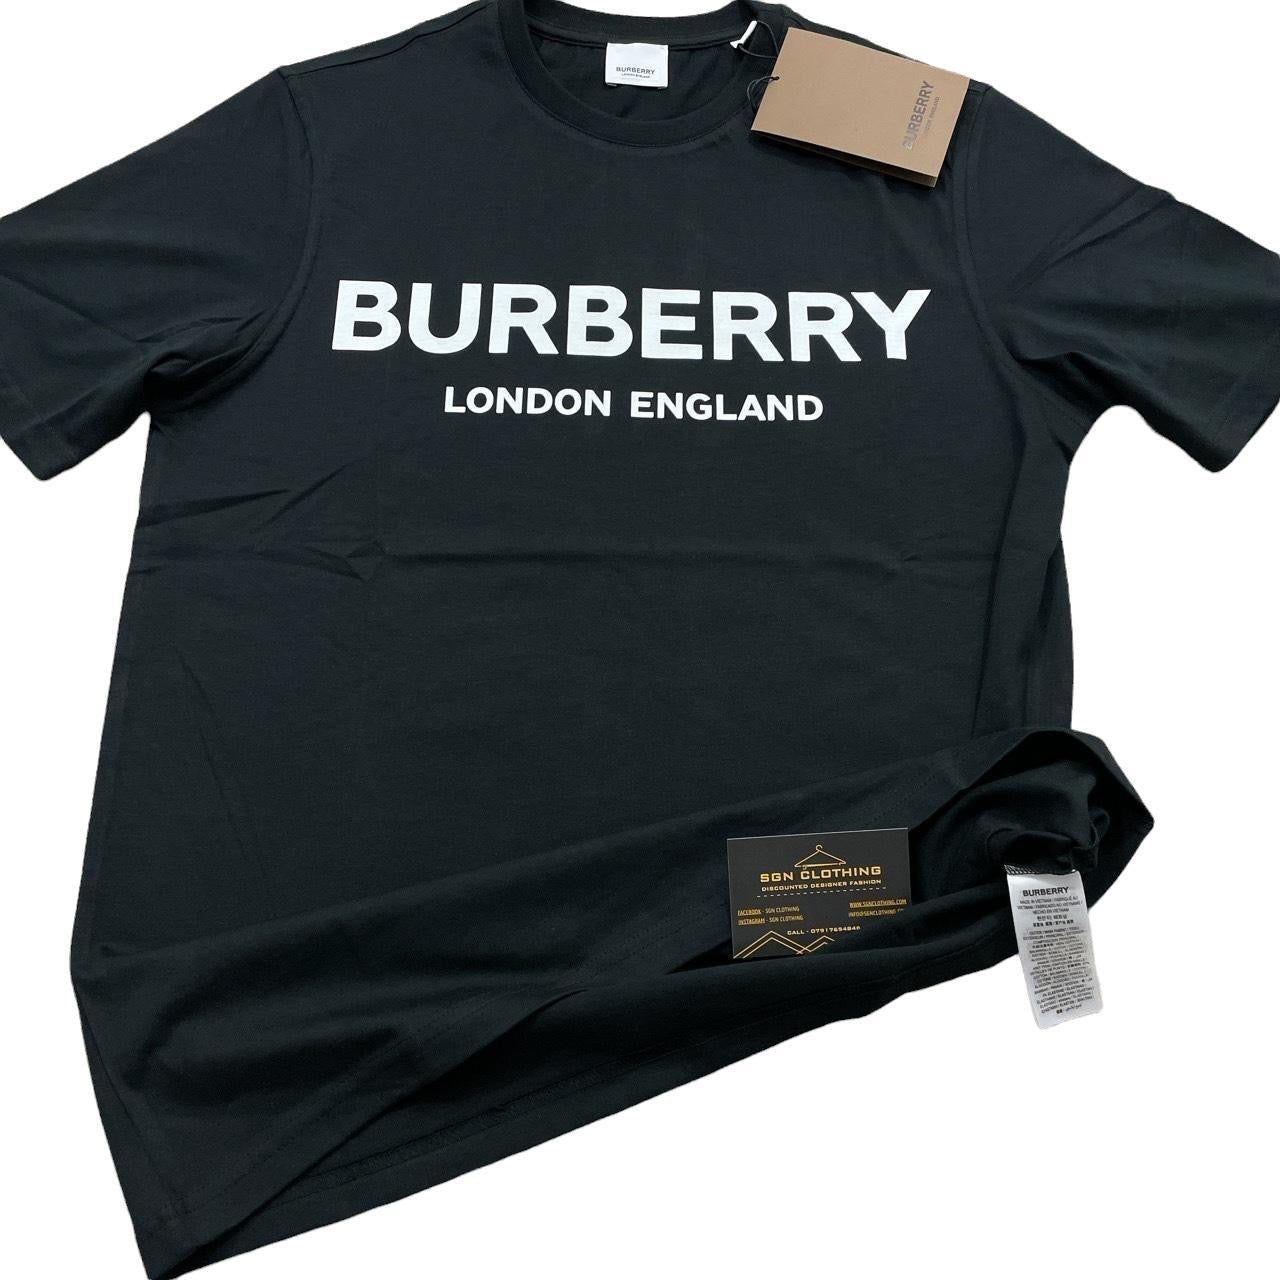 BURBERRY LONDON ENGLAND LETCHFORD LOGO TSHIRT - BLACK